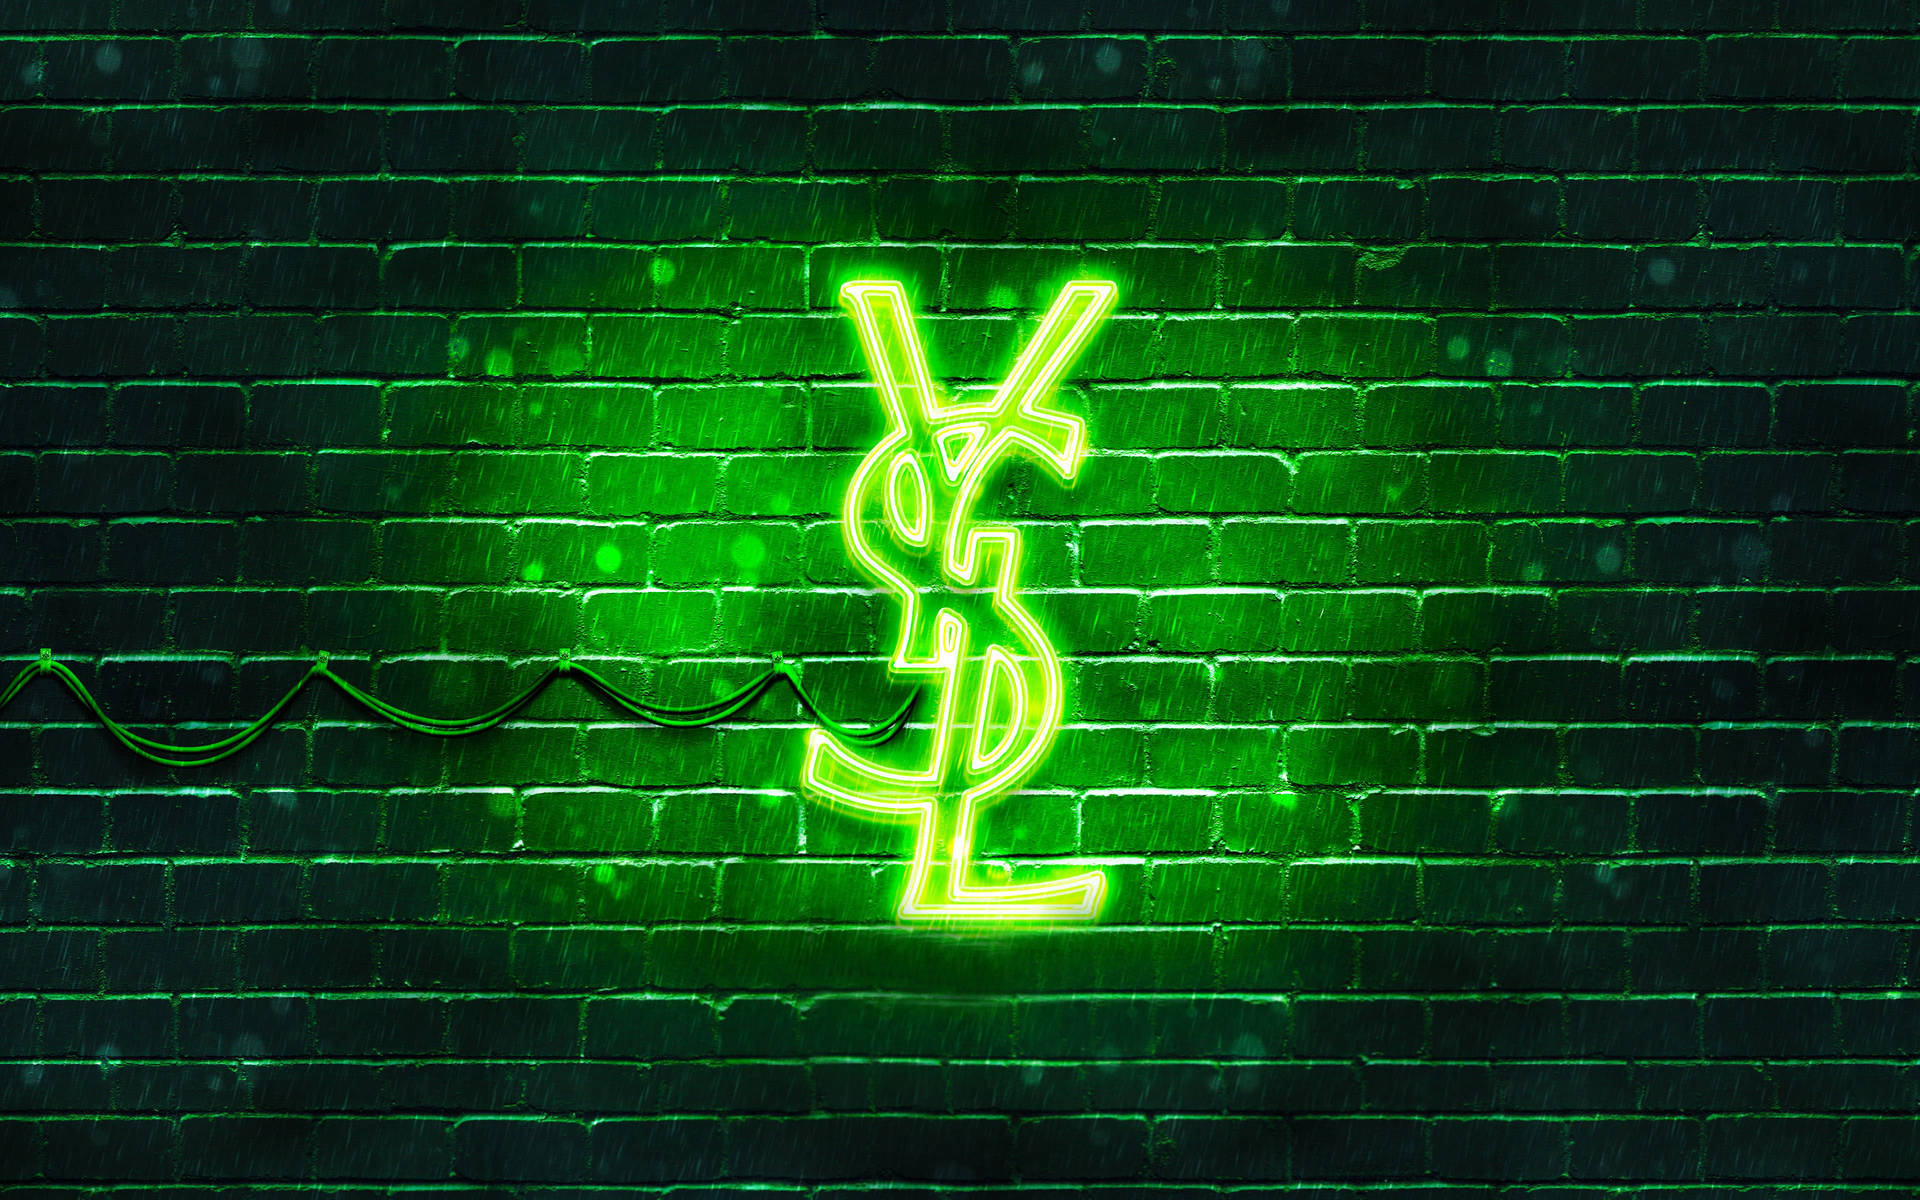 Green Ysl Neon Lighting Background